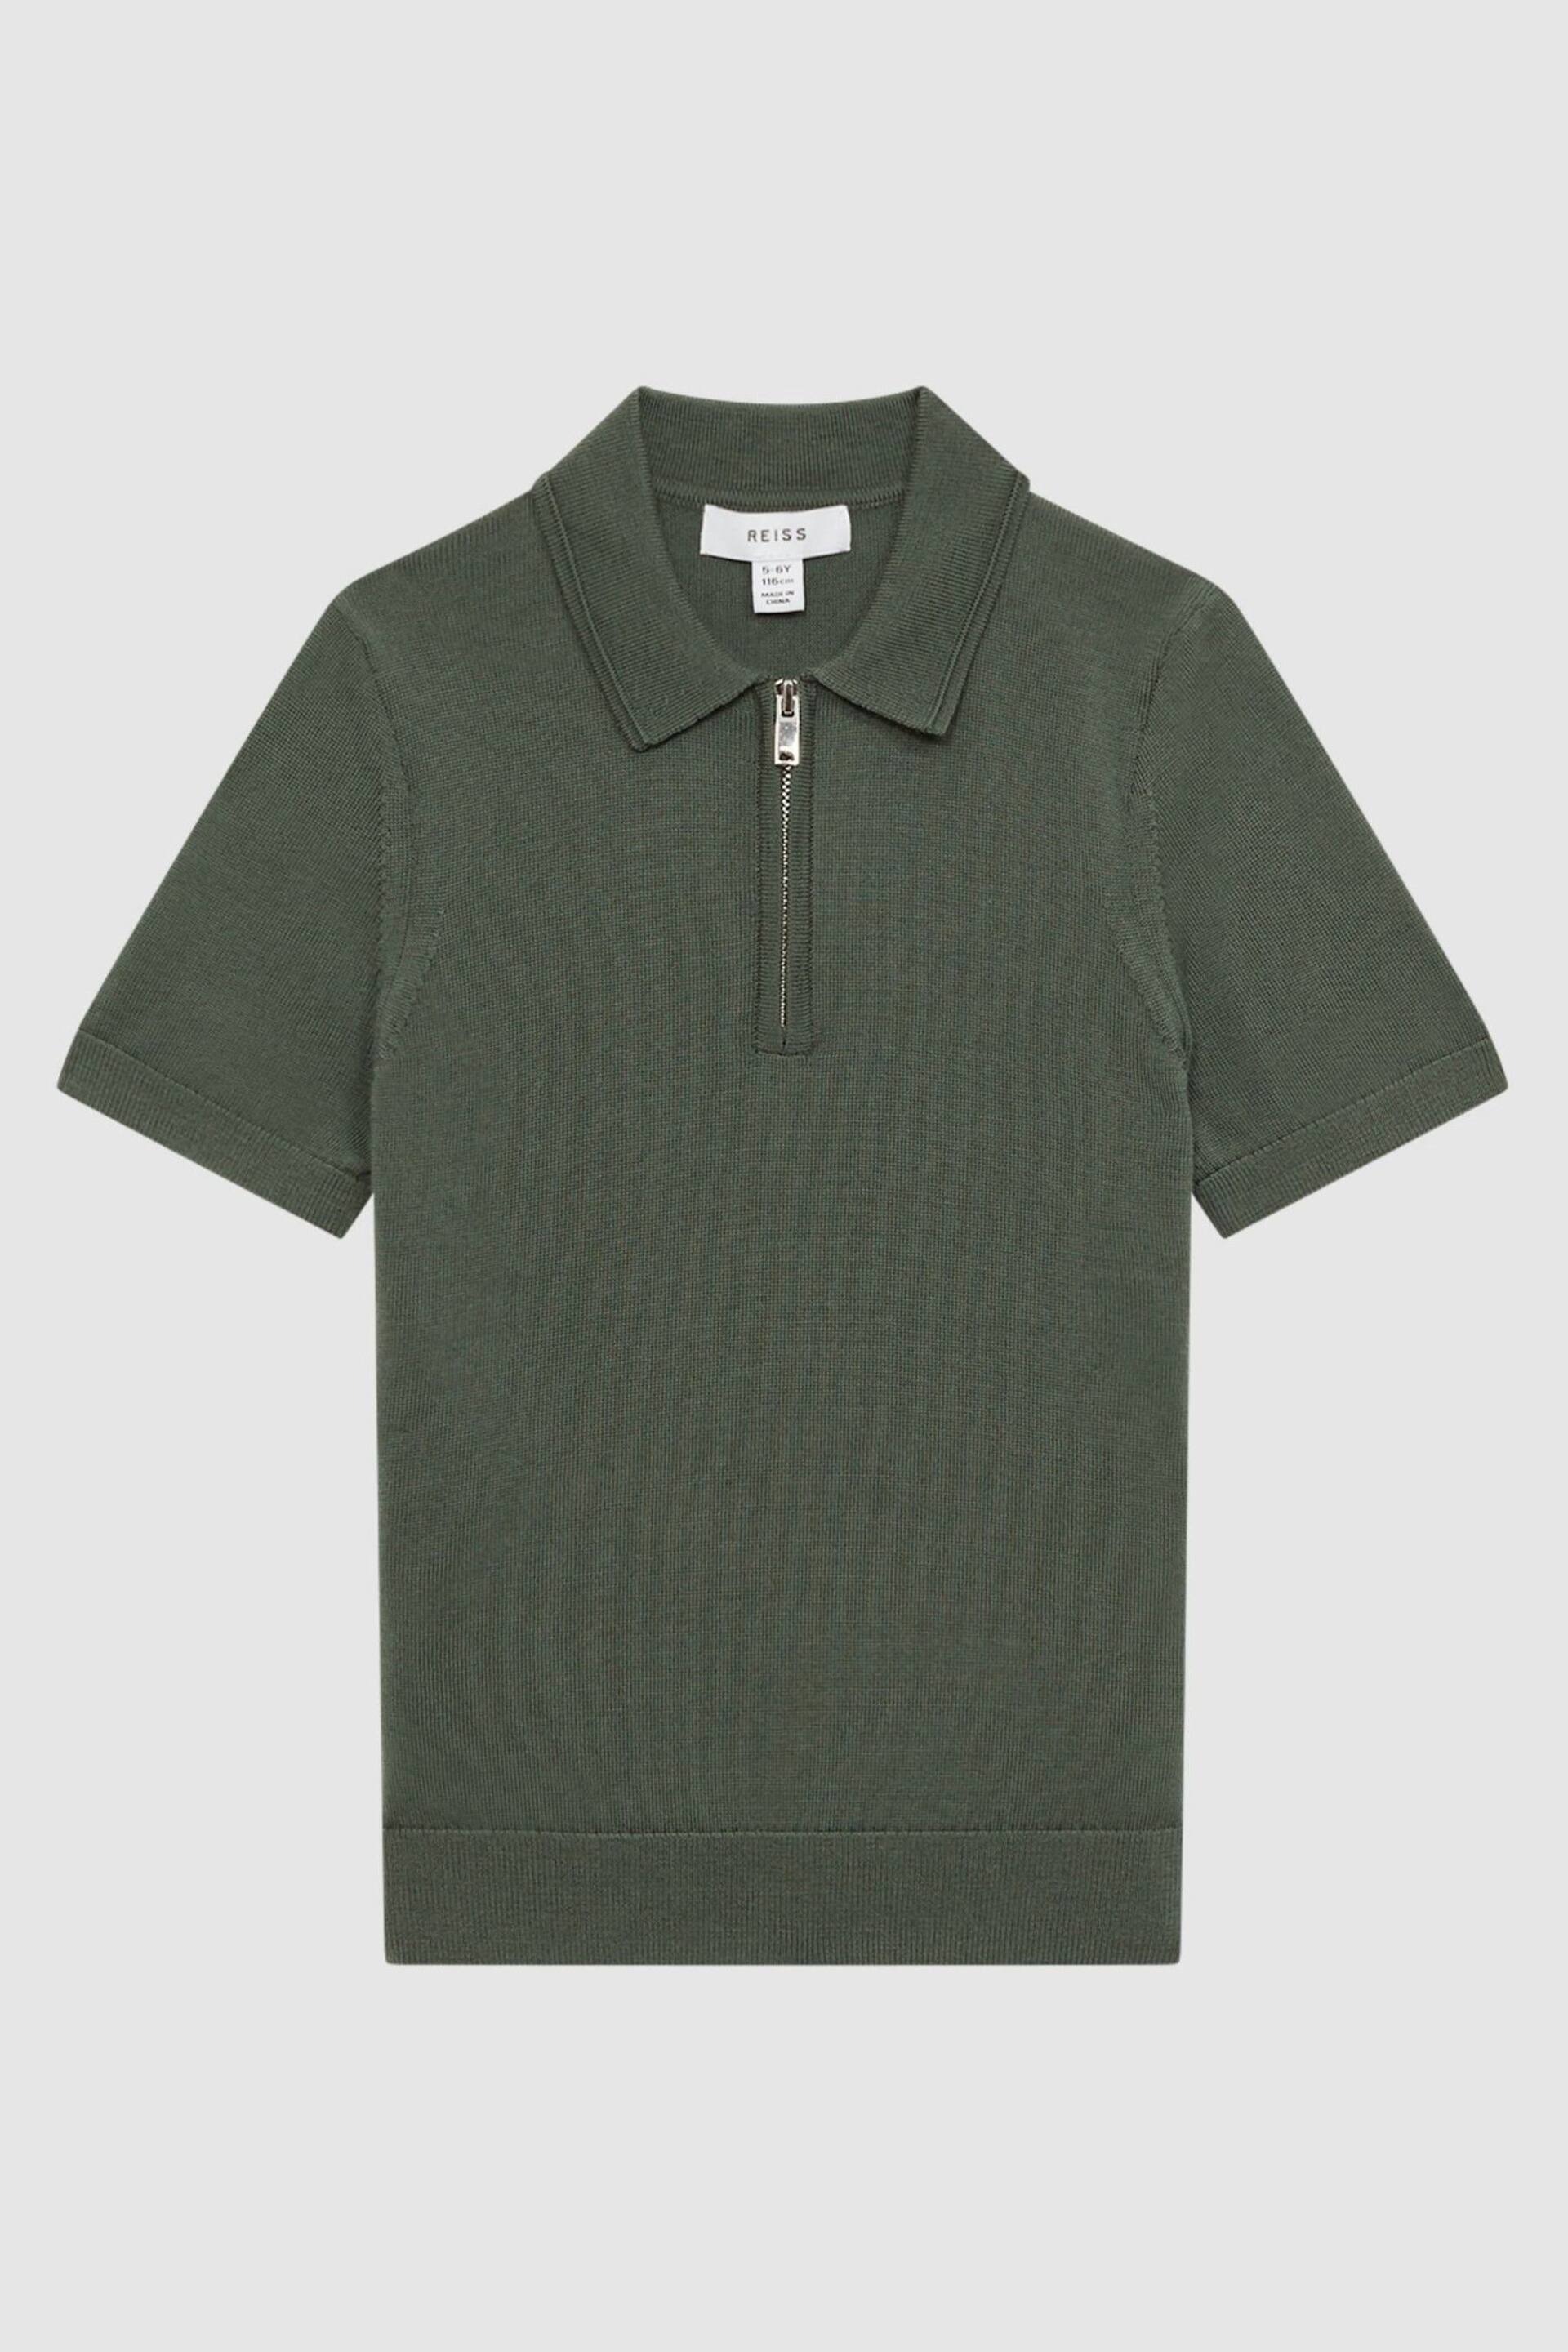 Reiss Ivy Green Maxwell Junior Merino Zip Neck Polo T-Shirt - Image 2 of 6